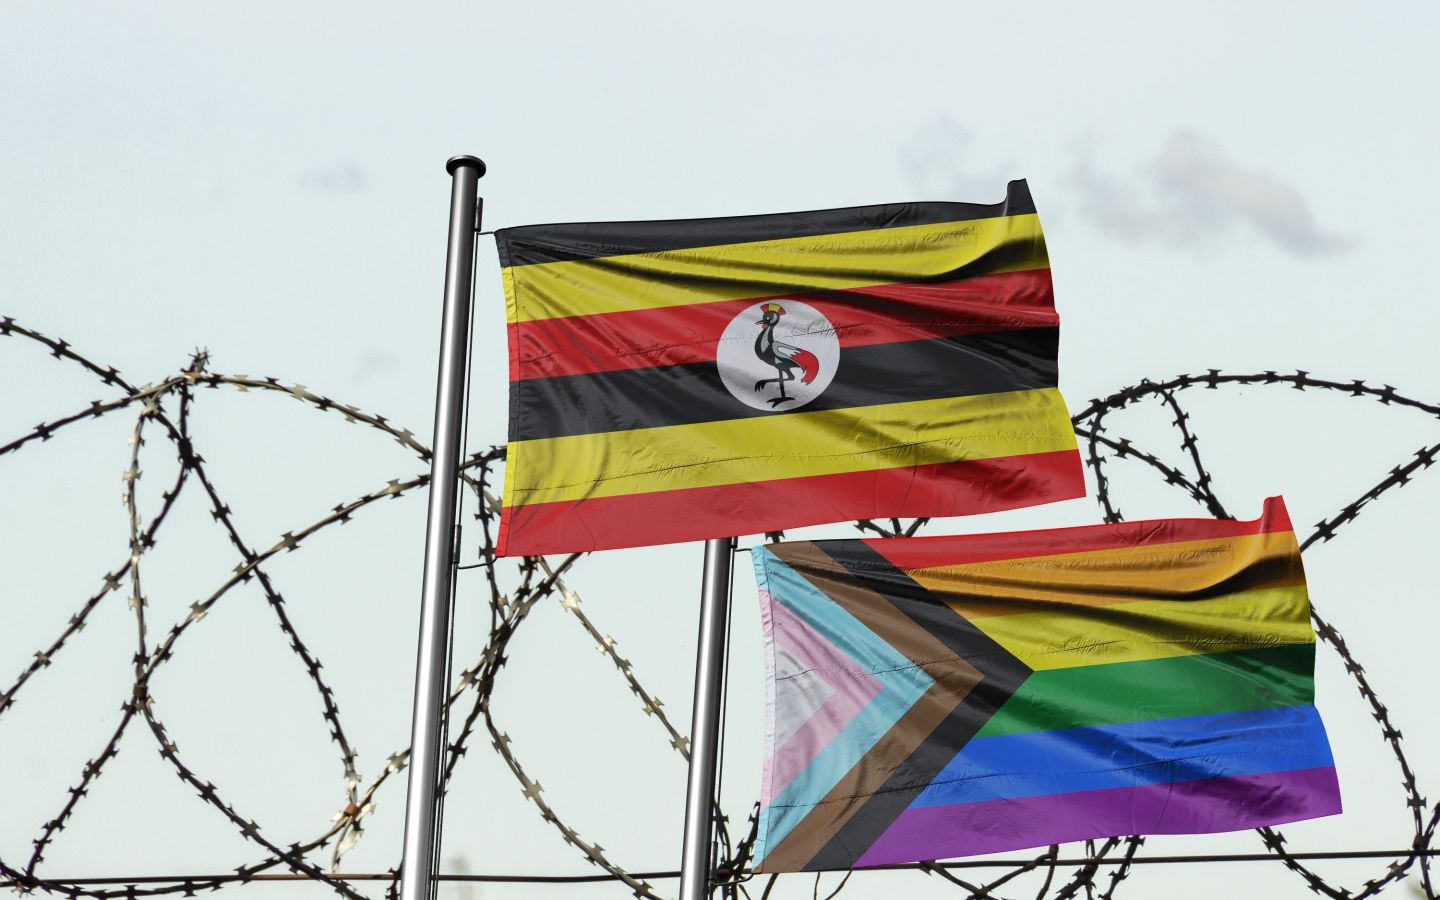 The flag of Uganda and a Pride flag